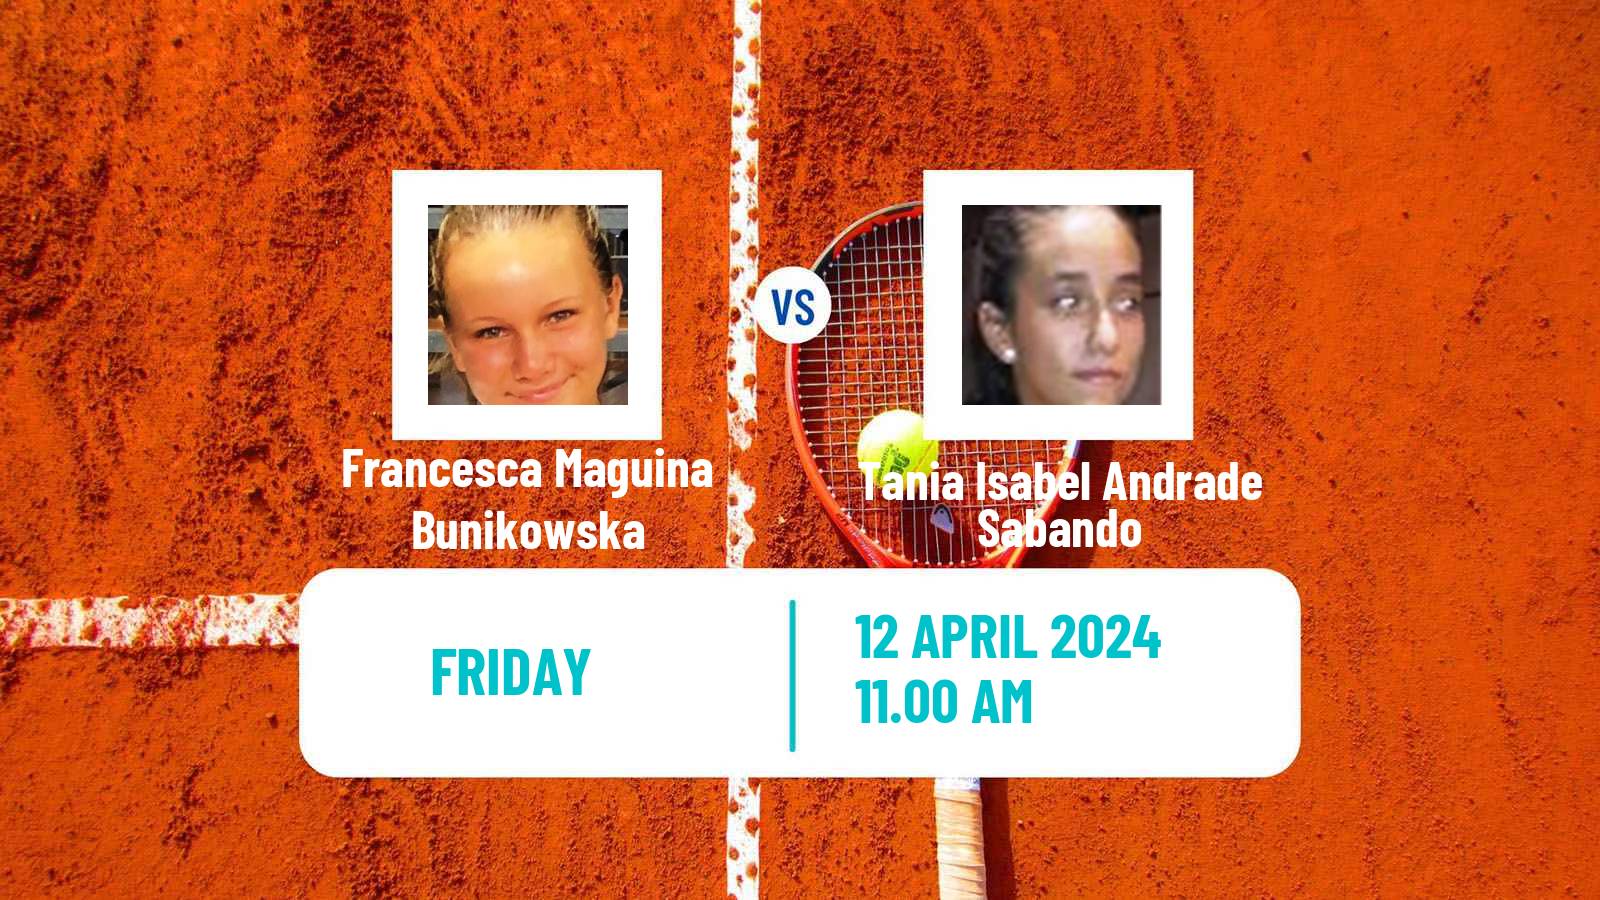 Tennis WTA Billie Jean King Cup Group I Francesca Maguina Bunikowska - Tania Isabel Andrade Sabando